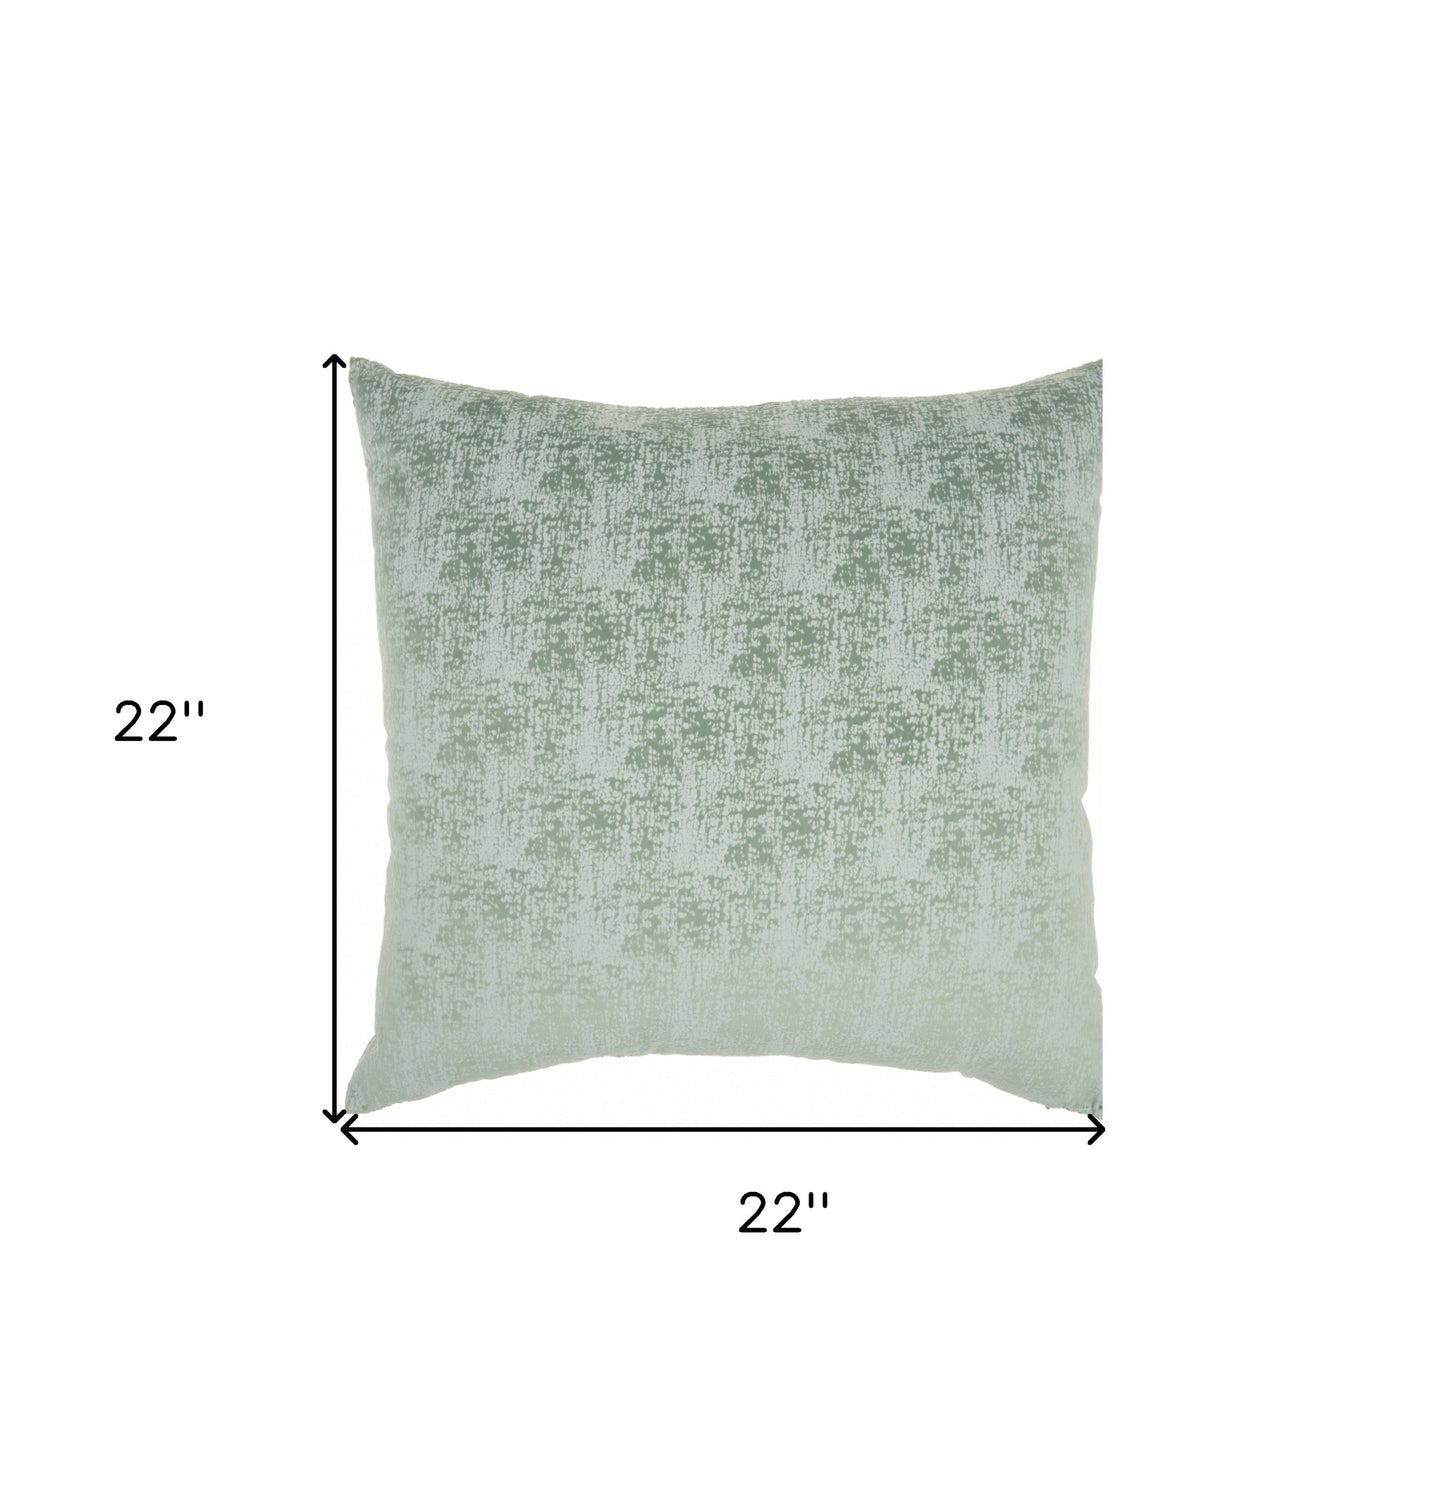 22" Green Abstract Throw Pillow